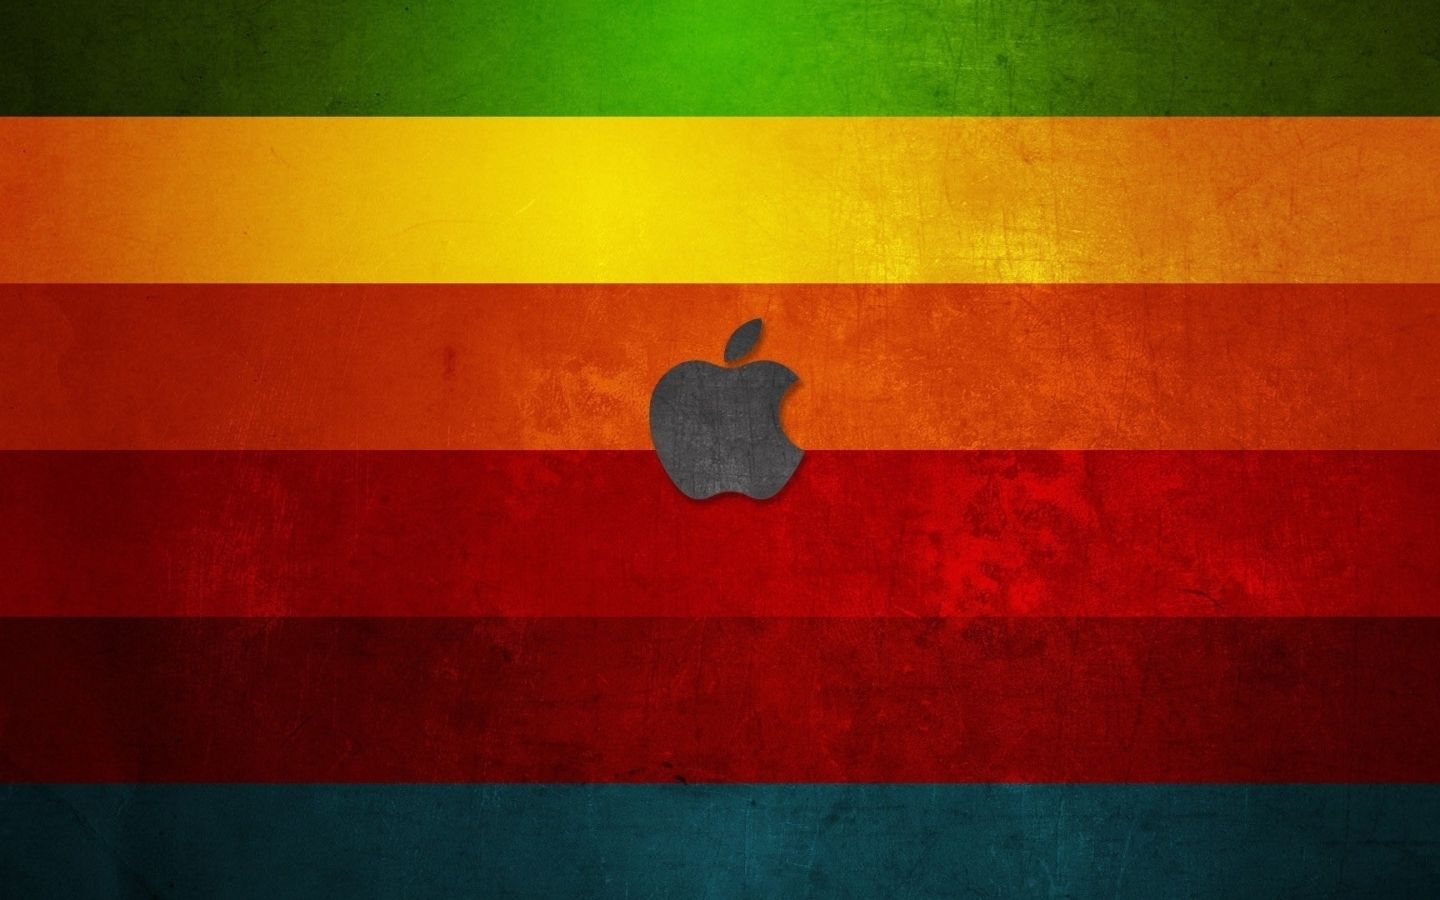 Color Bar Background Apple Mac Wallpaper Download | Free Mac ...